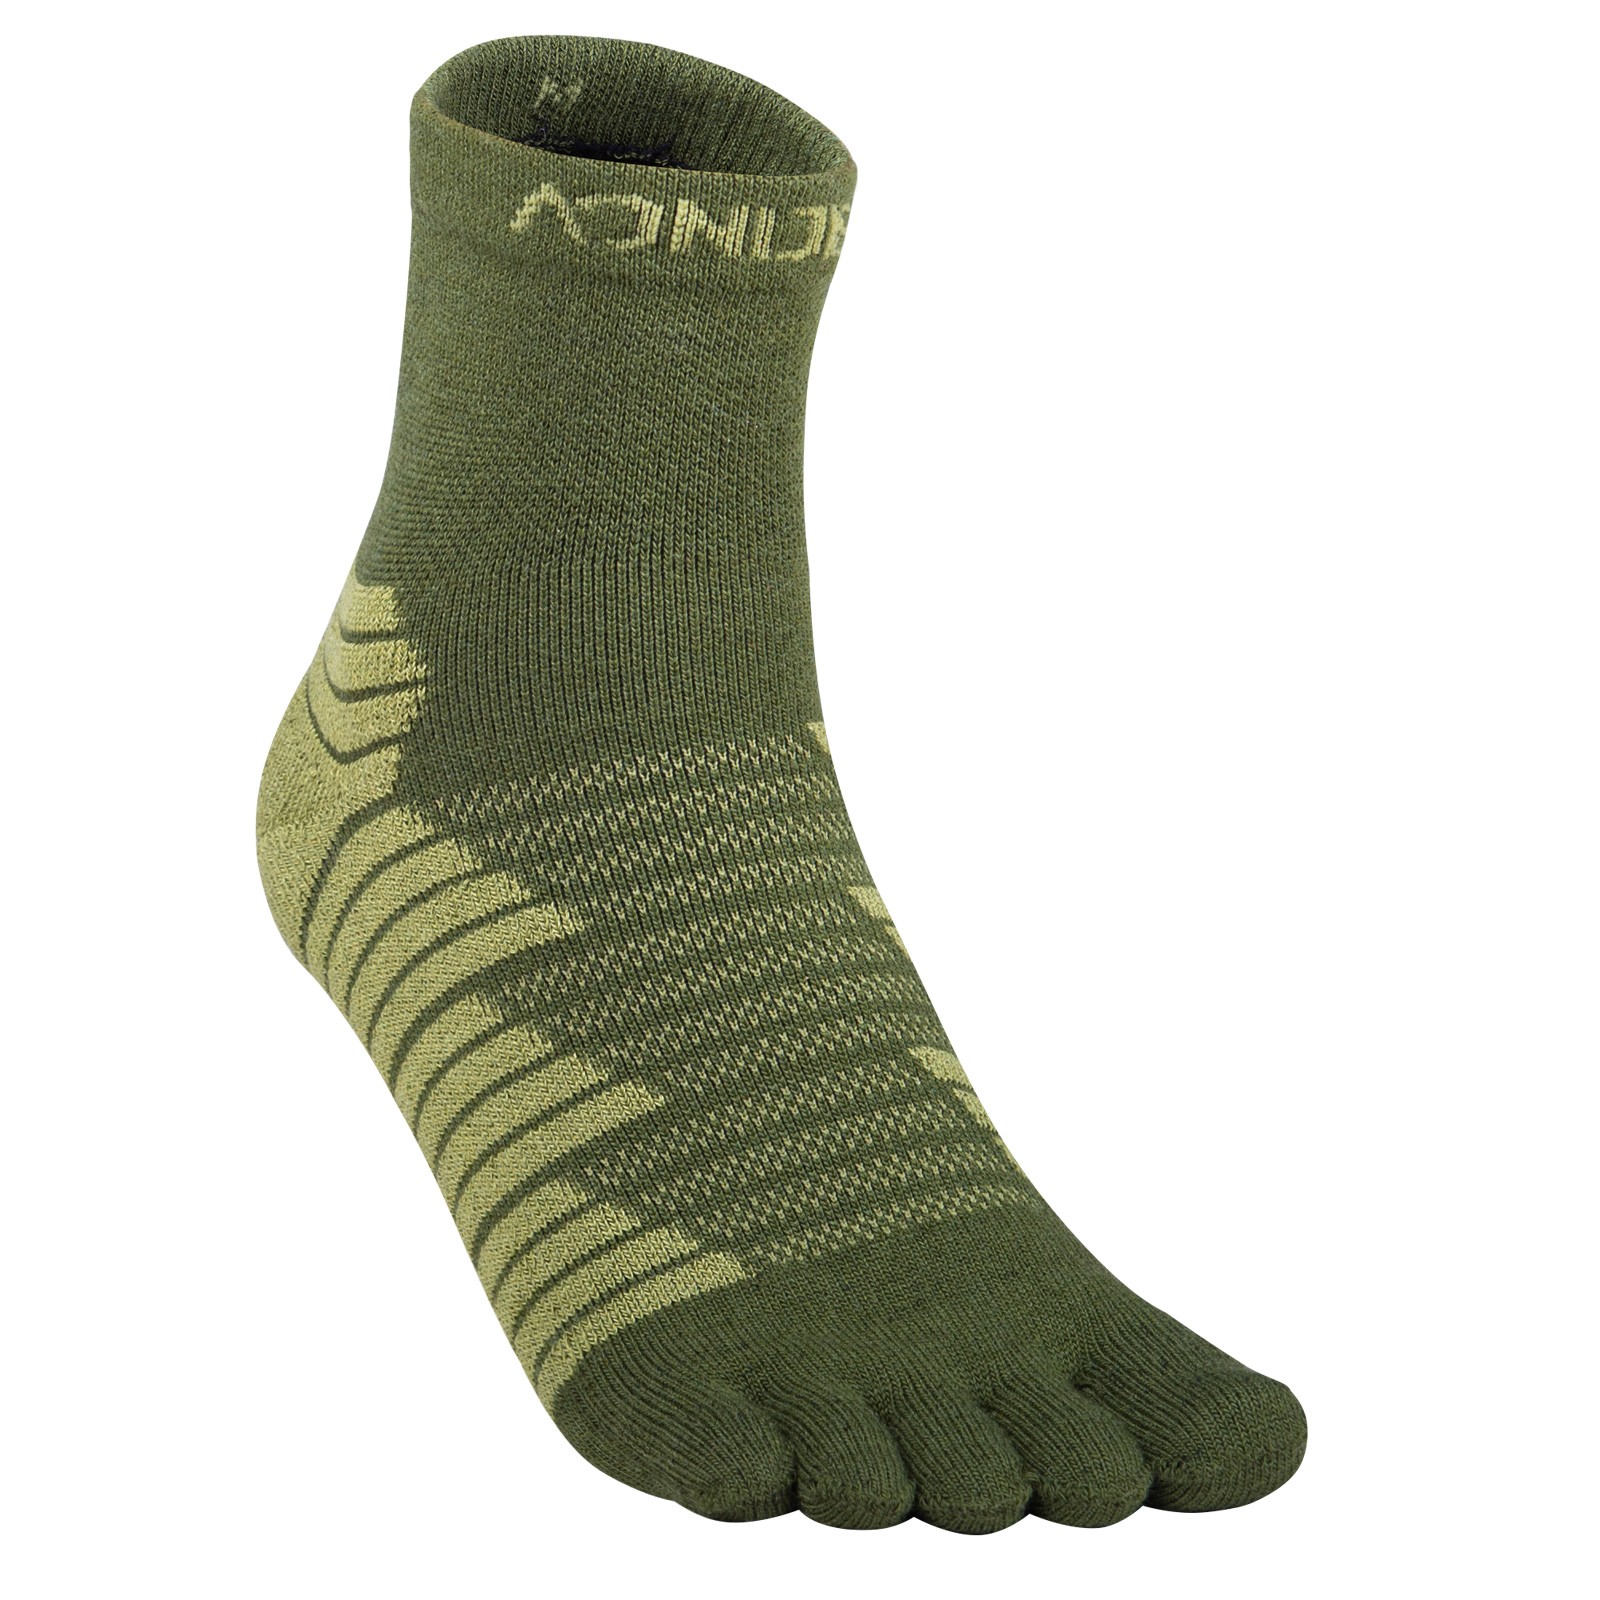 Squad Goods Neoprene Toe Socks for Running Hiking 1 Pair Cycling